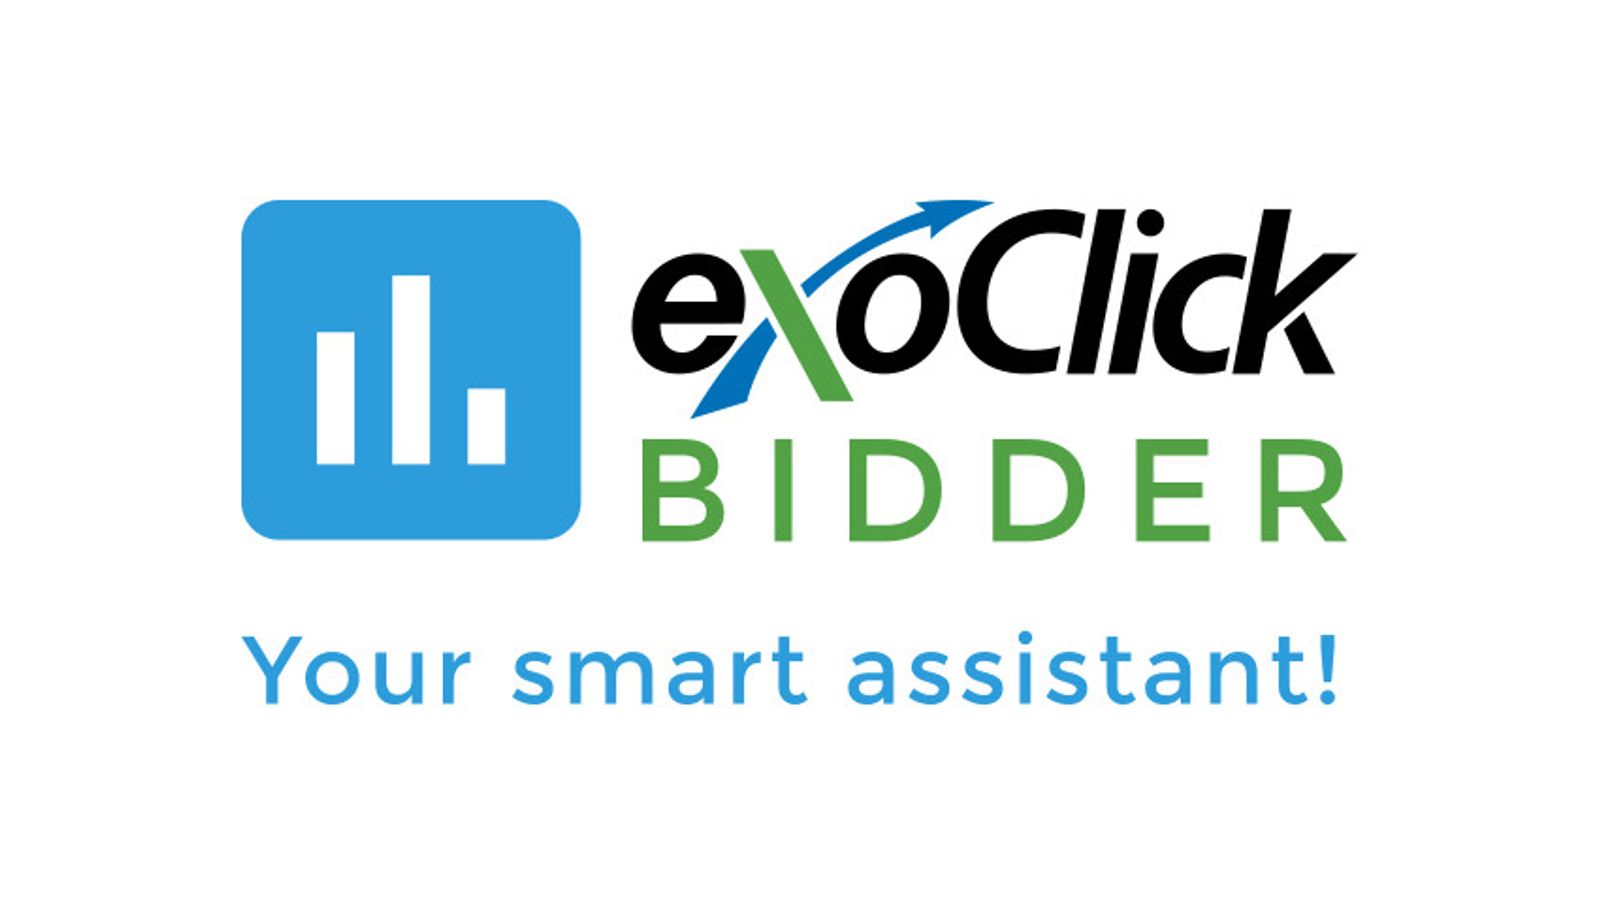 ExoClick Bidder Launches